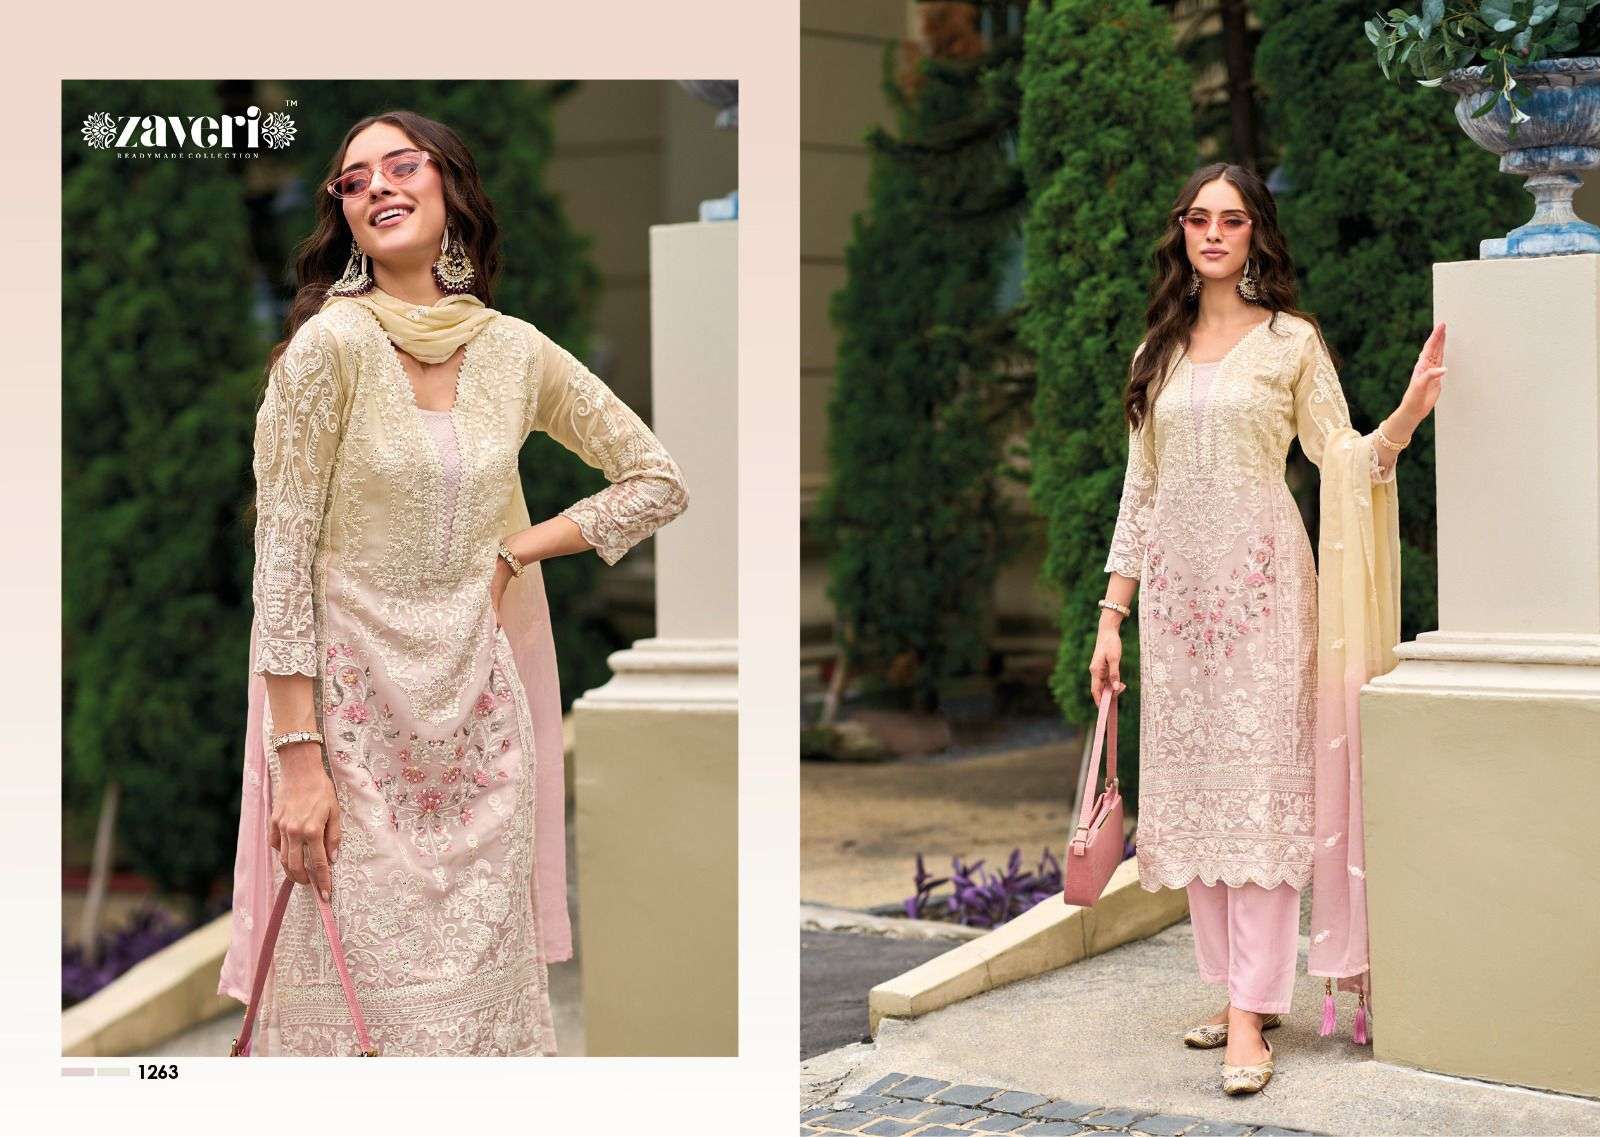 zaveri femina colours edition 1262-1264 series party wear look straight cut salwar kameez wholesale price 